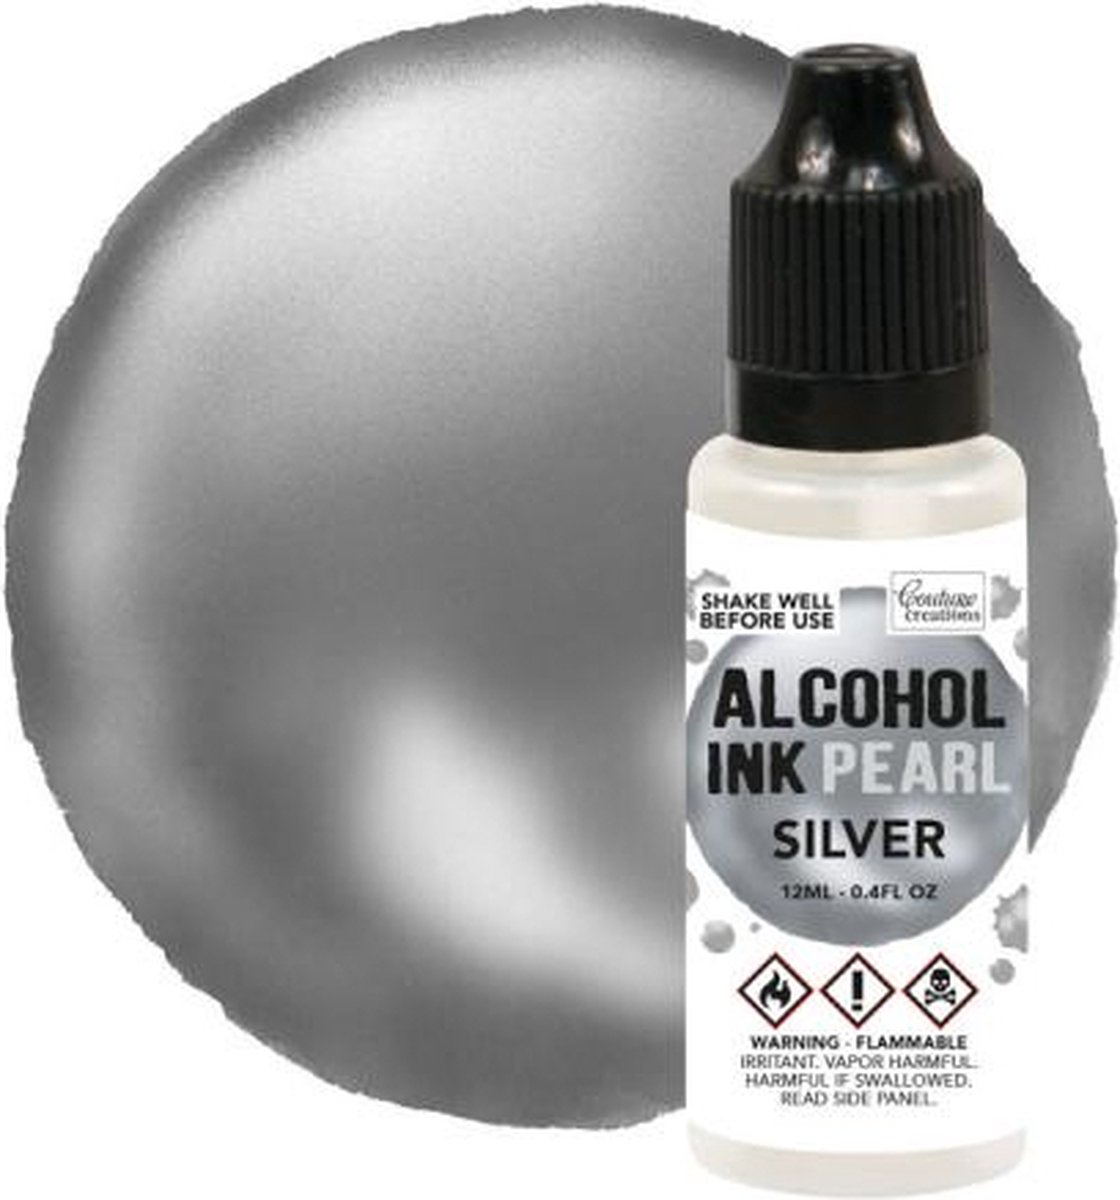 Silver / Silver Pearl Alcohol Ink (12mL | 0.4fl oz)